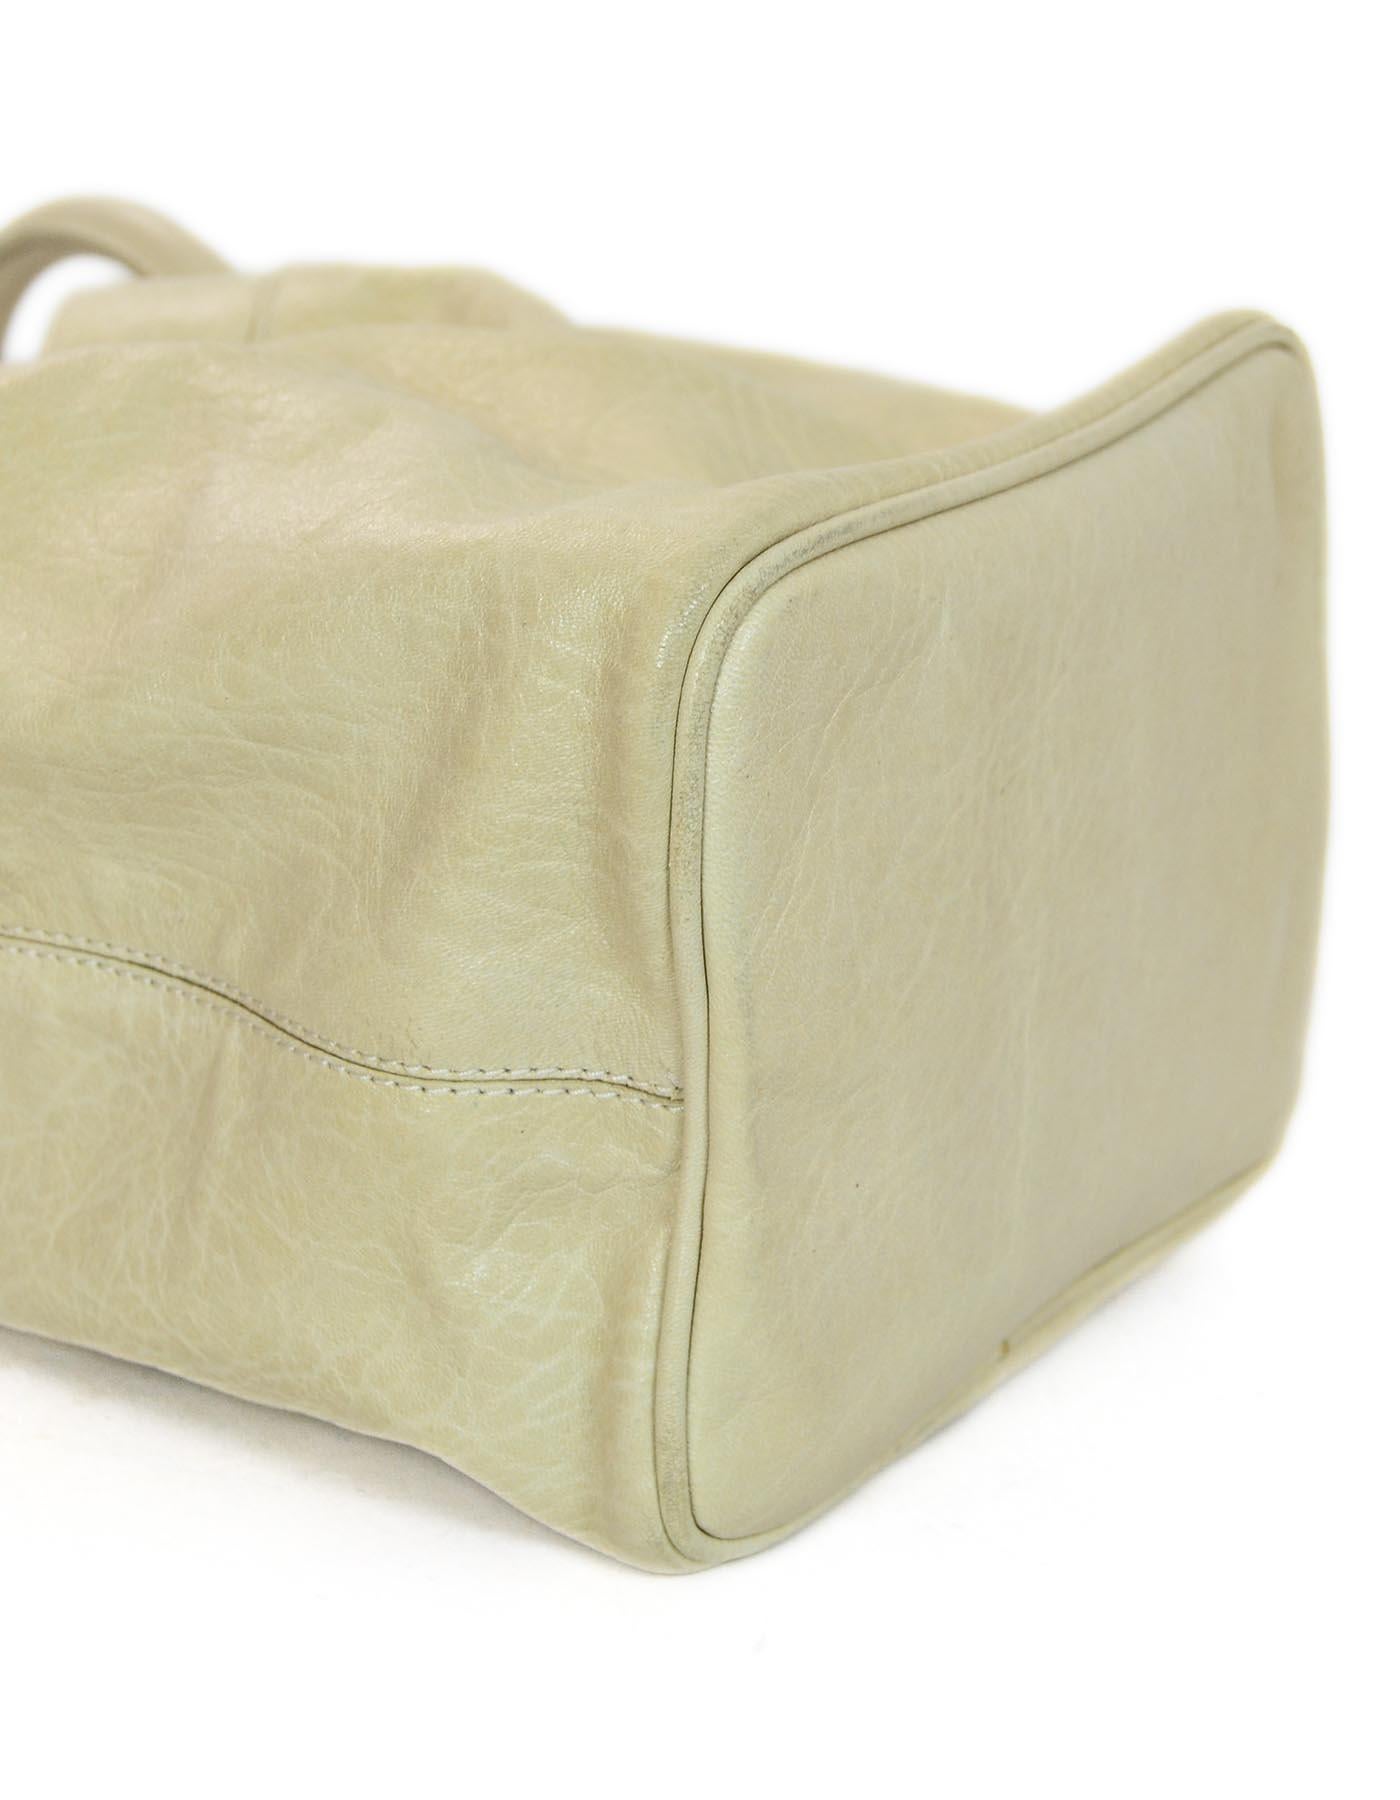 Women's Marc Jacobs Beige Leather Top Handle Bag W/ Stones